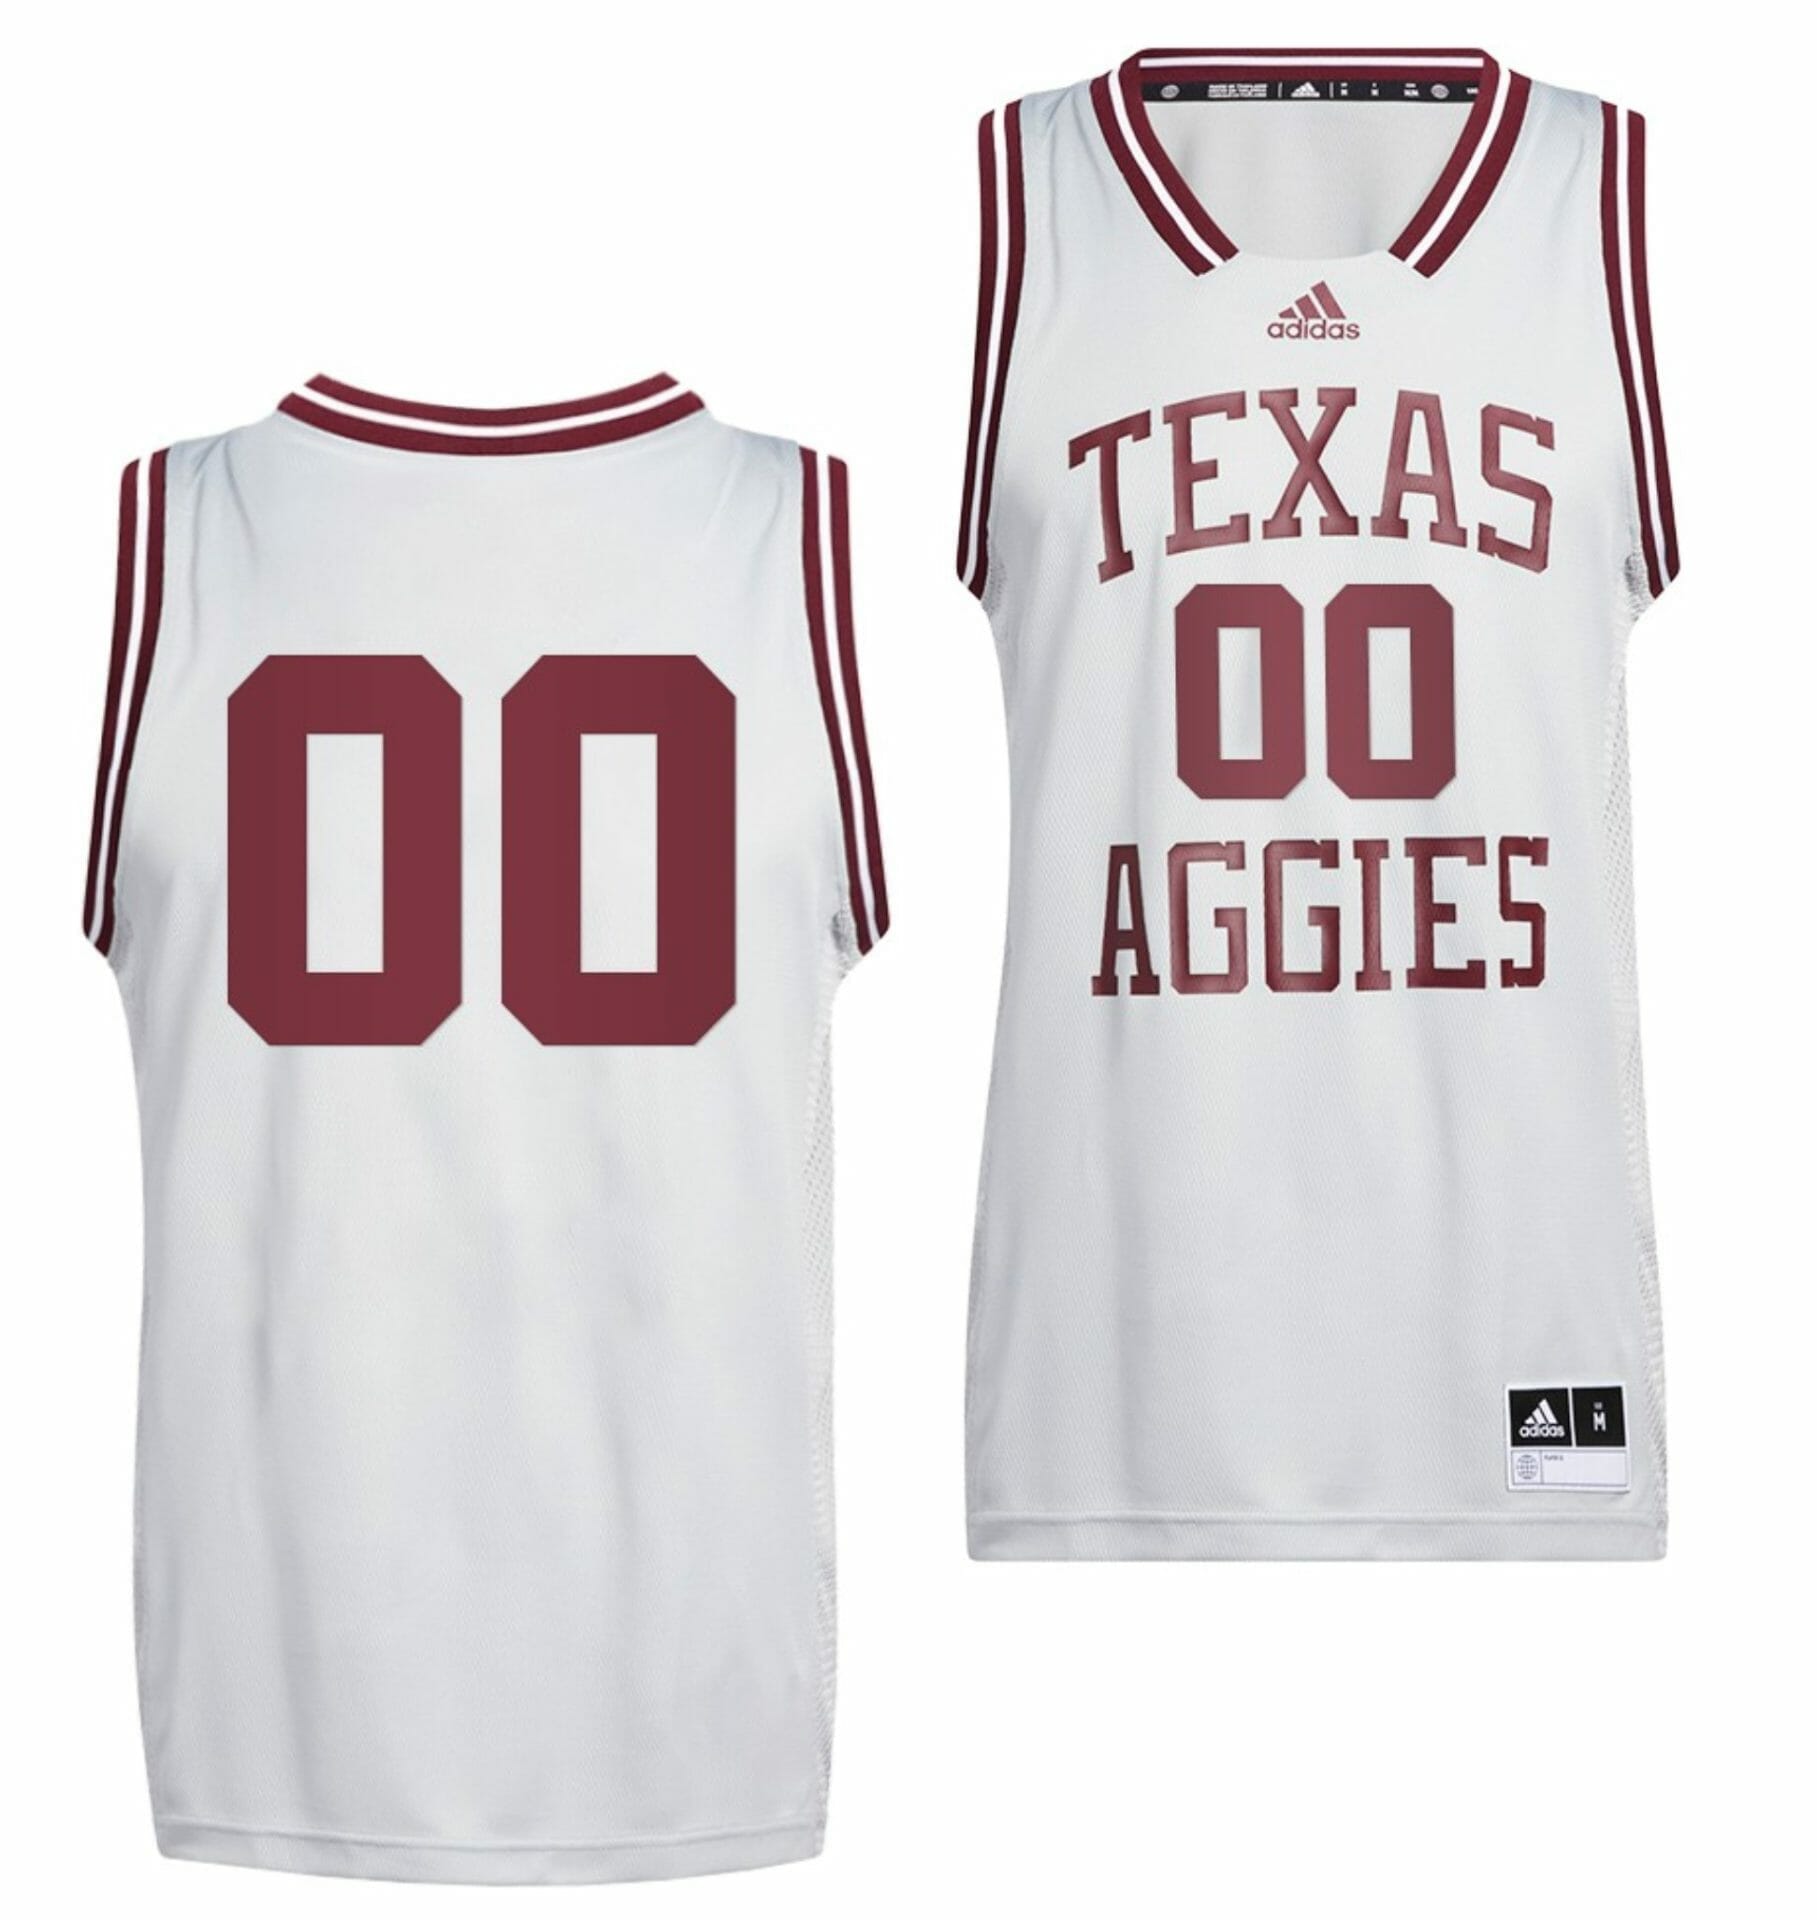 Texas A&M Adidas CUSTOM Basketball Jersey